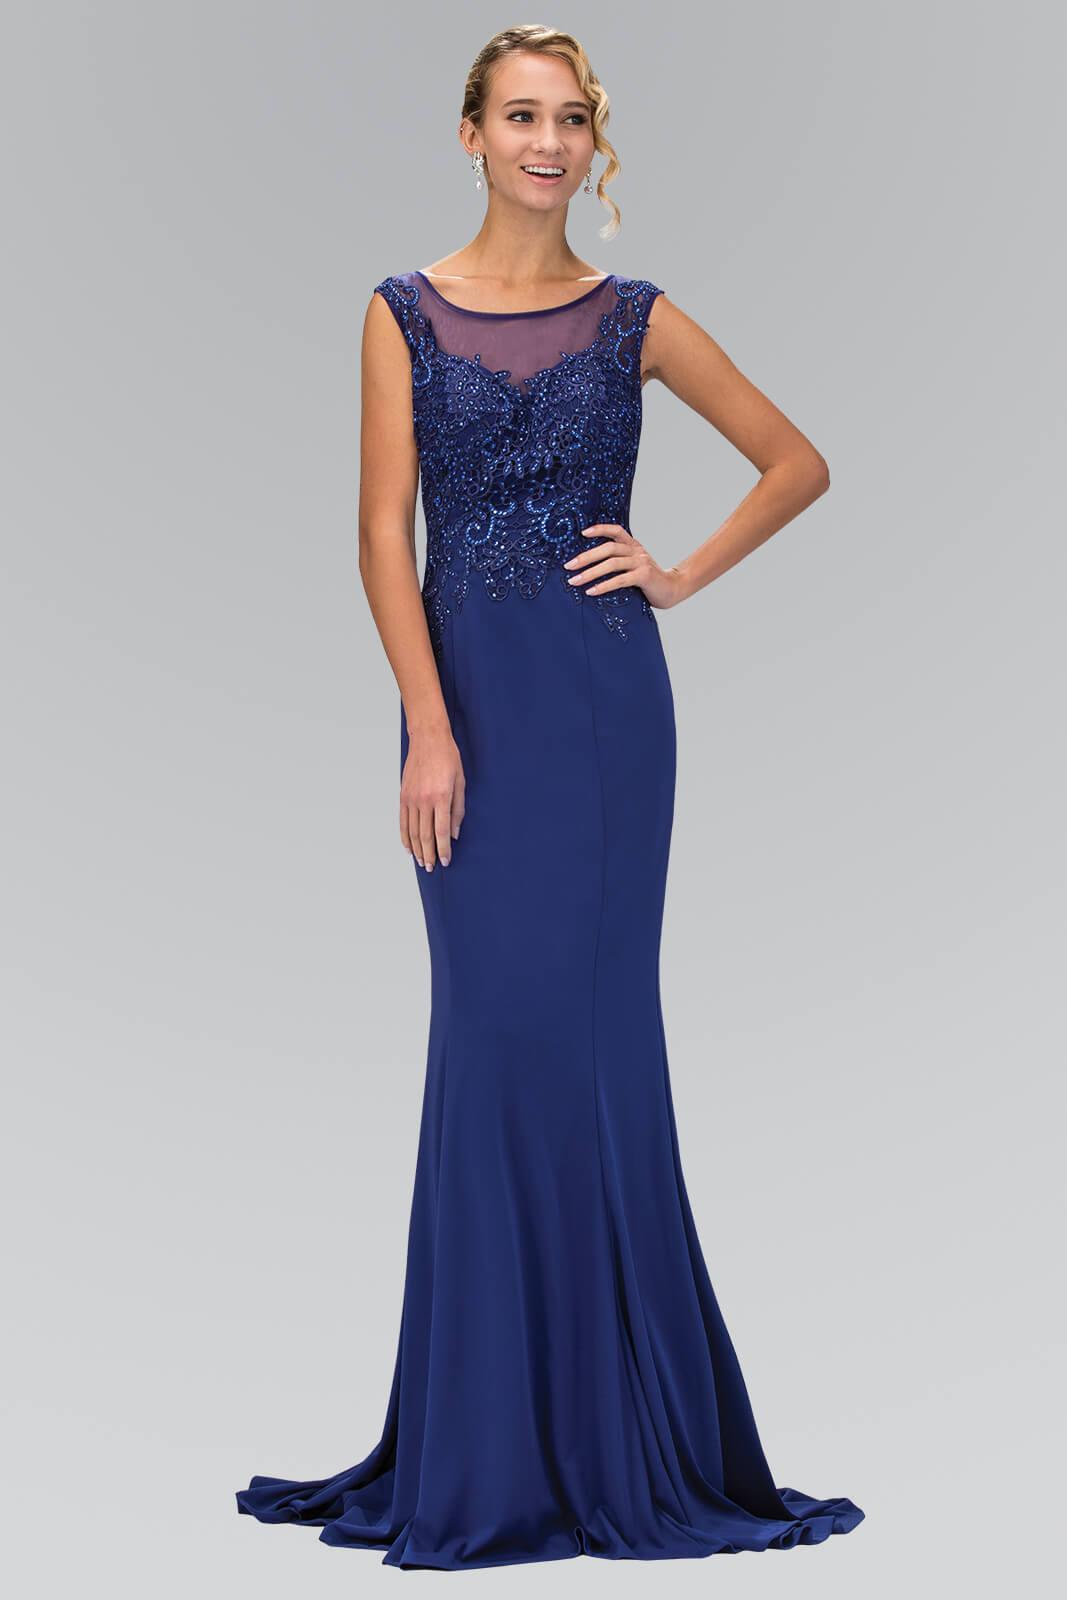 Sleeveless Rome Jersey Long Prom Dress Formal - The Dress Outlet Elizabeth K